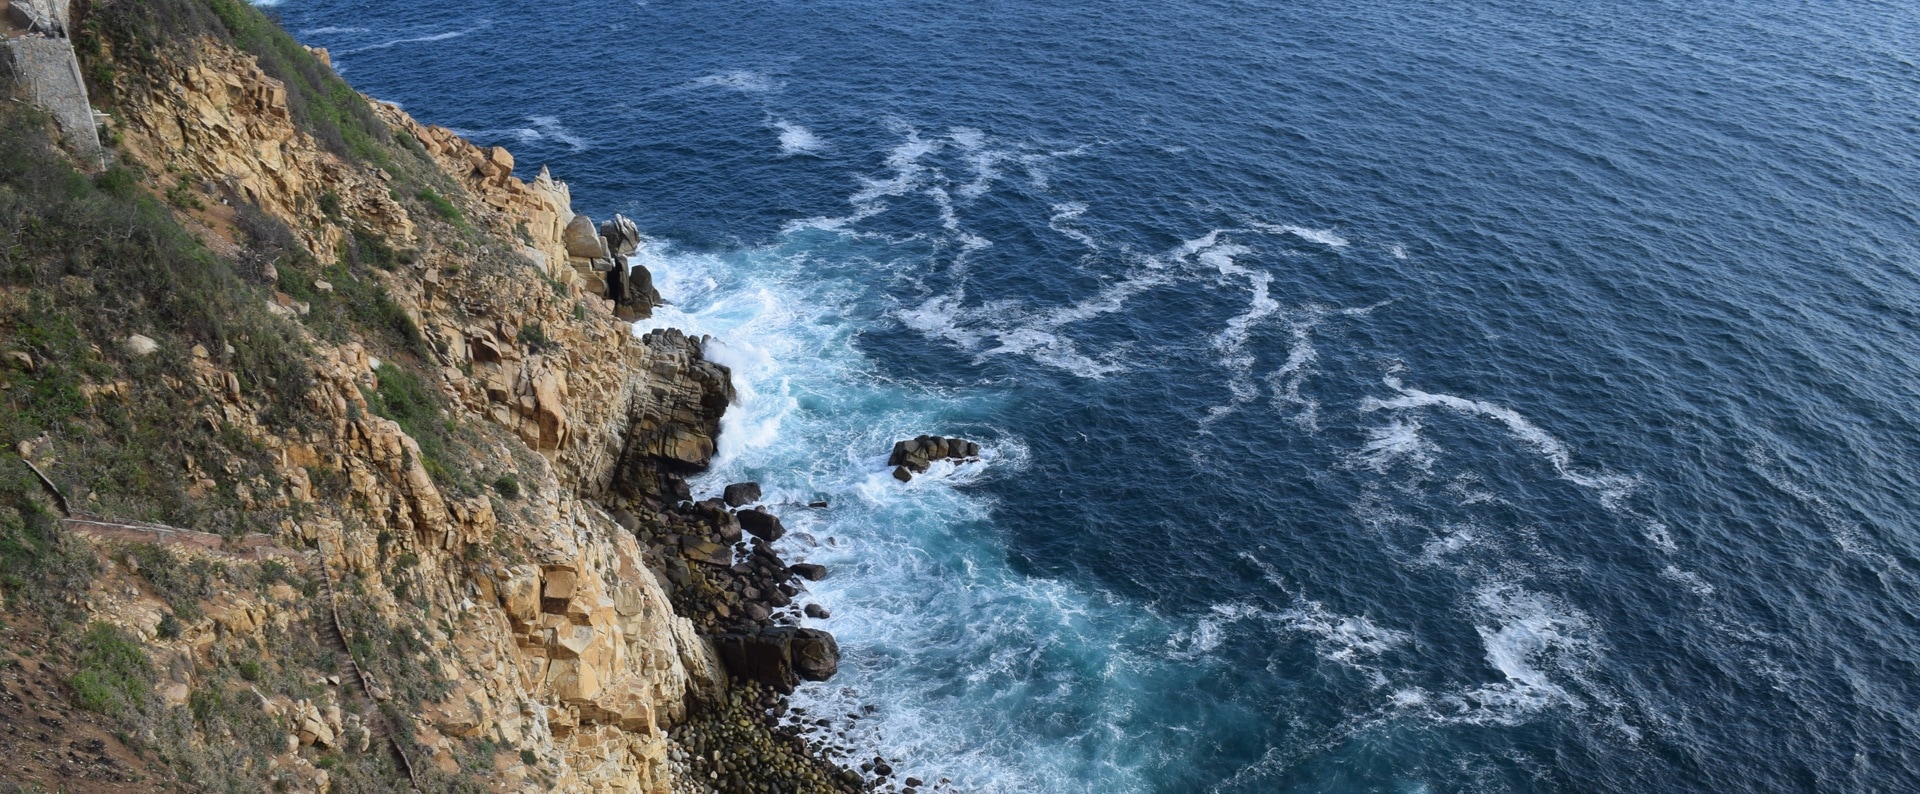 photograph of rocky cliff near ocean